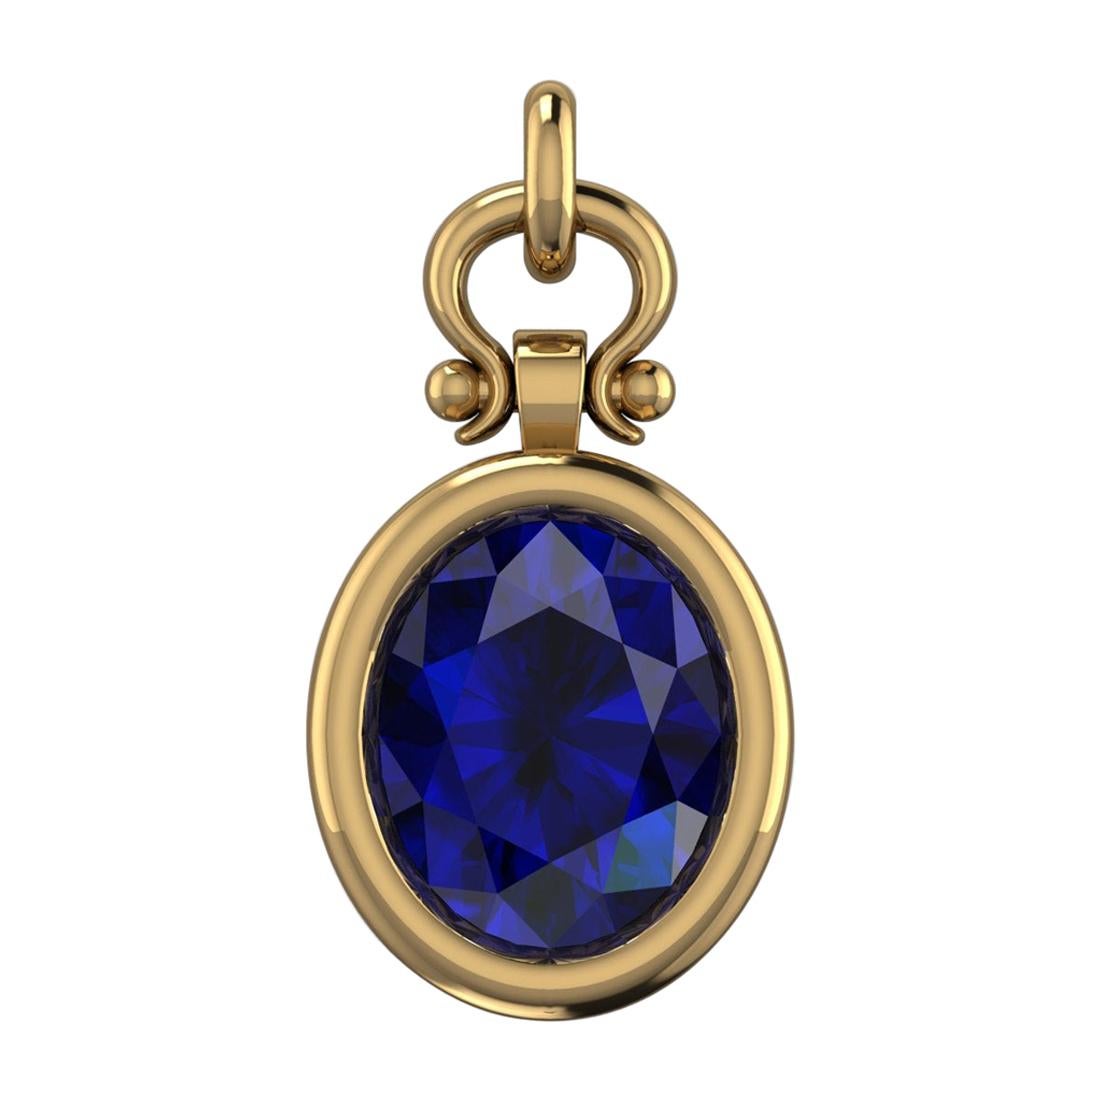 3.09 Carat Oval Cut Blue Sapphire Custom Pendant Necklace in 18k For Sale